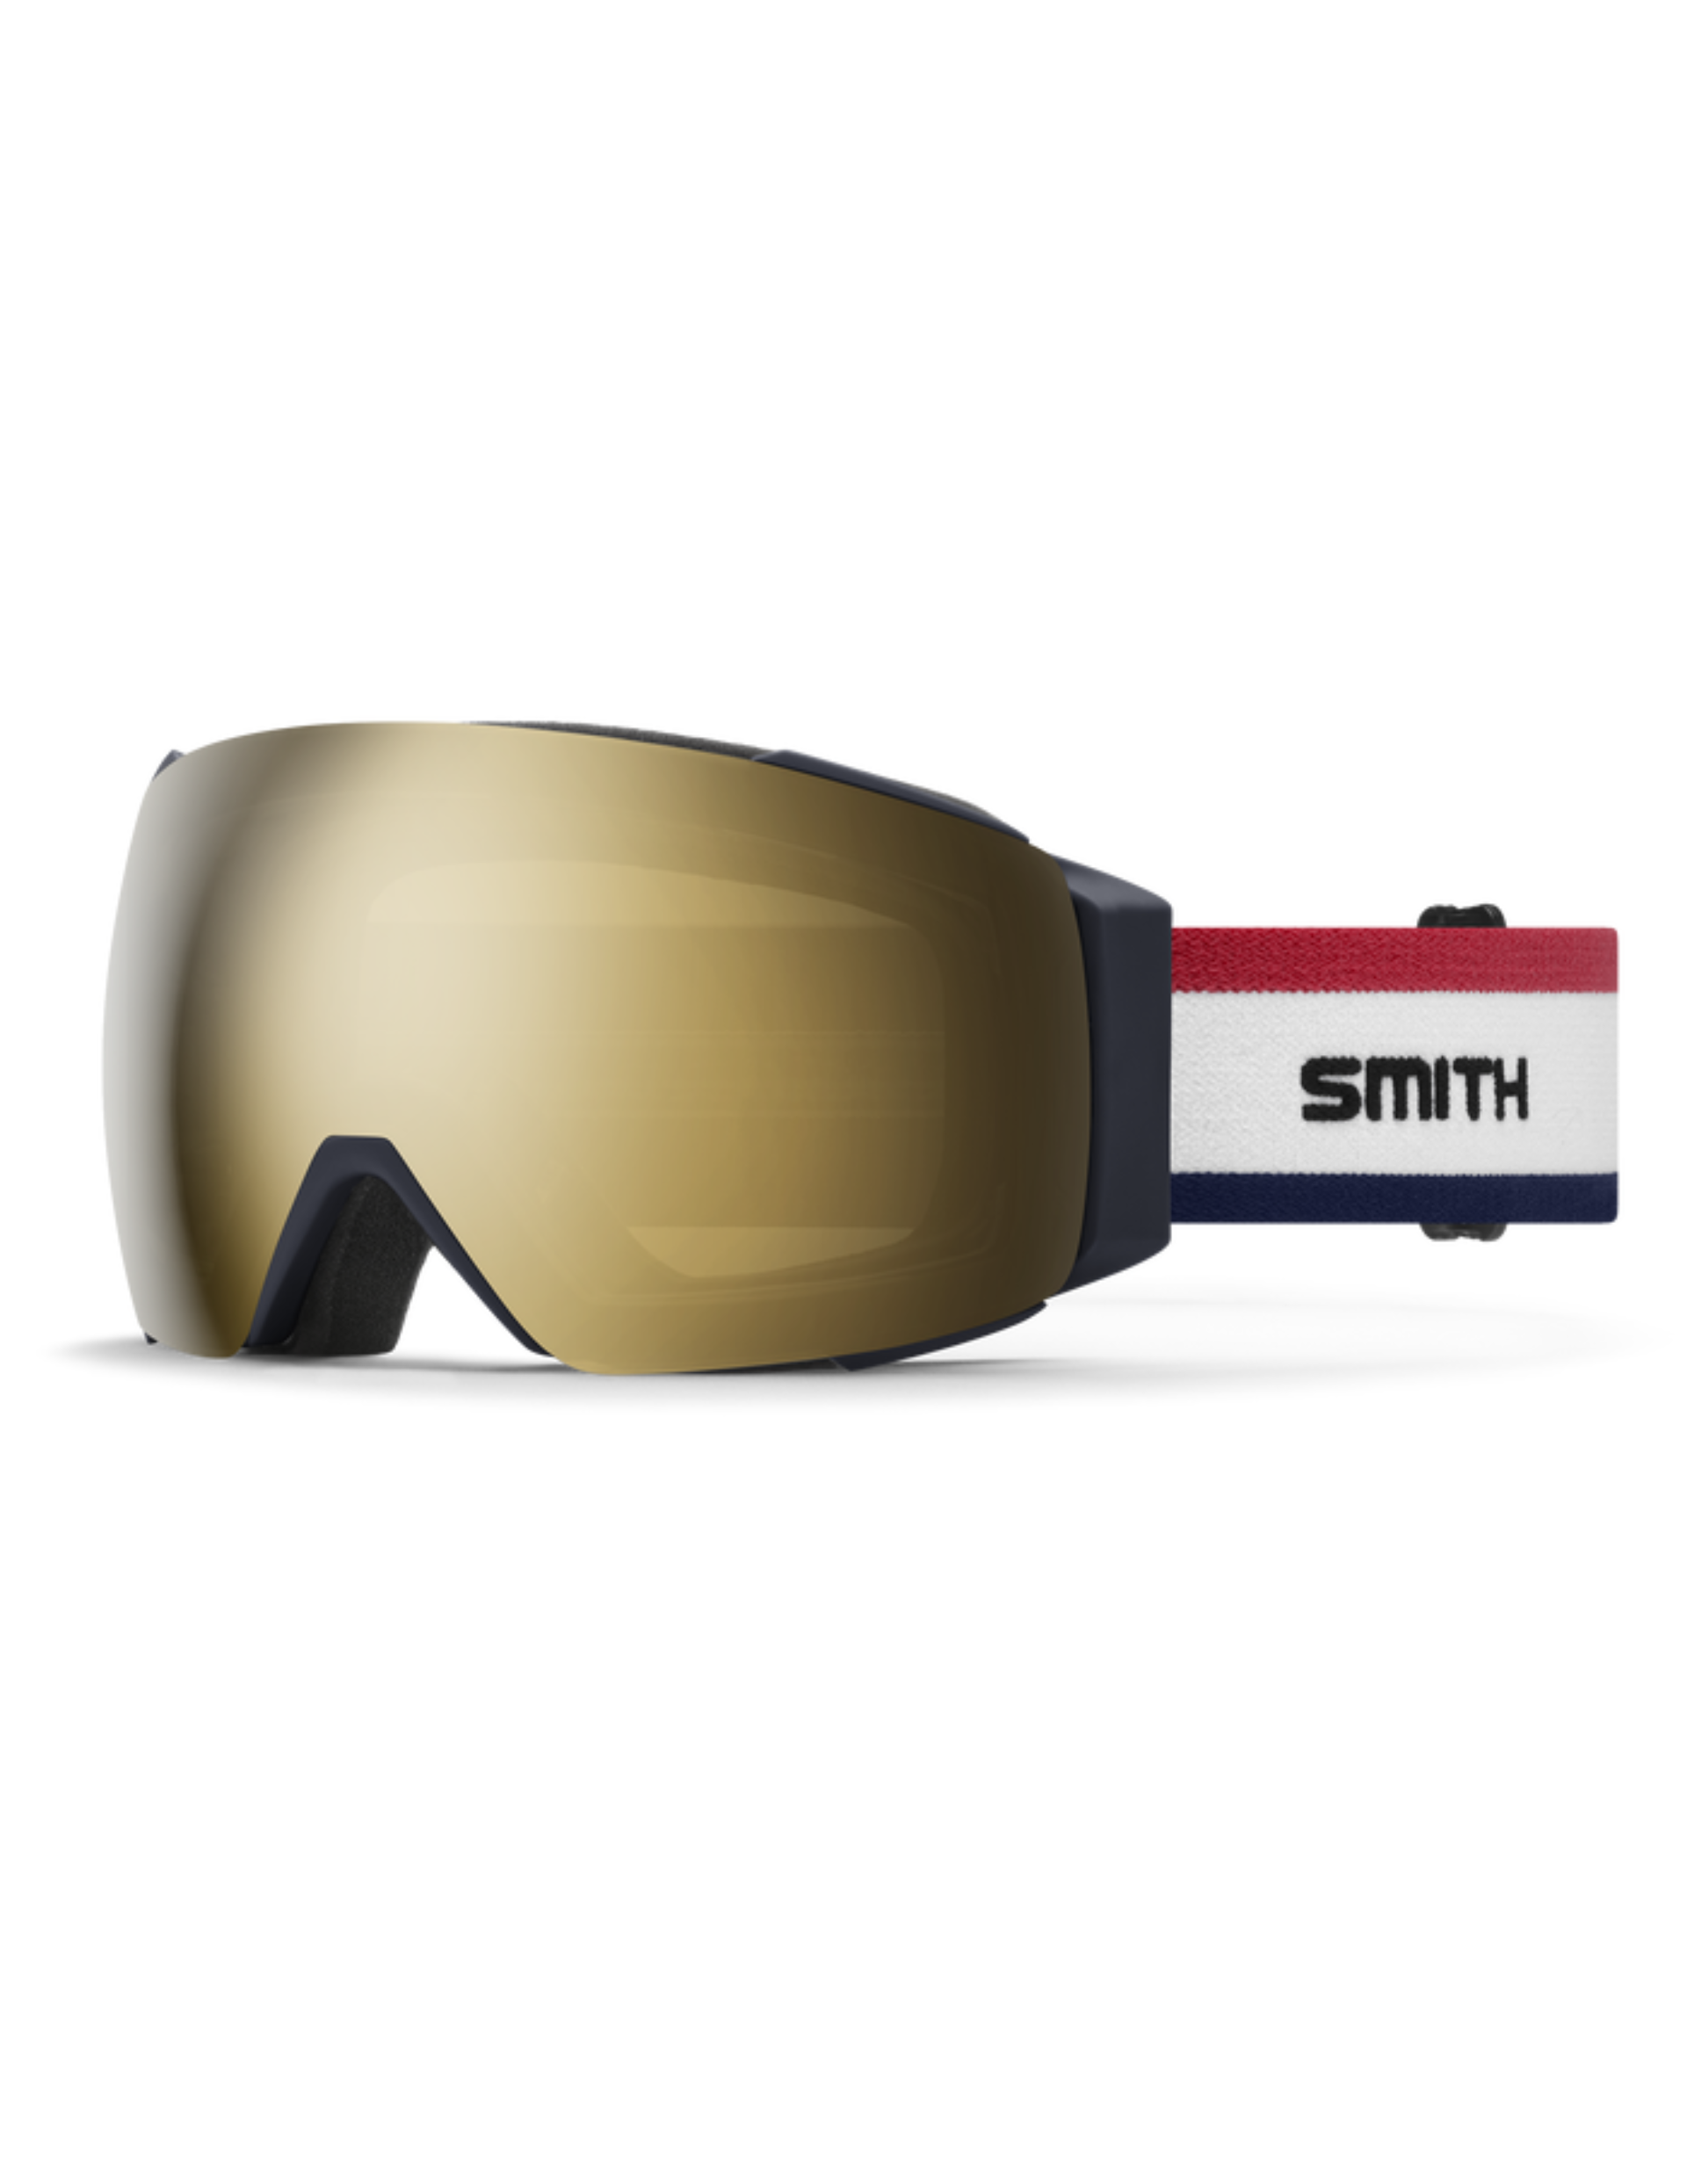 SMITH Masque de Ski Smith AS I/O Mag Bleu Marine, Masques et Lunettes de Ski  - Muule